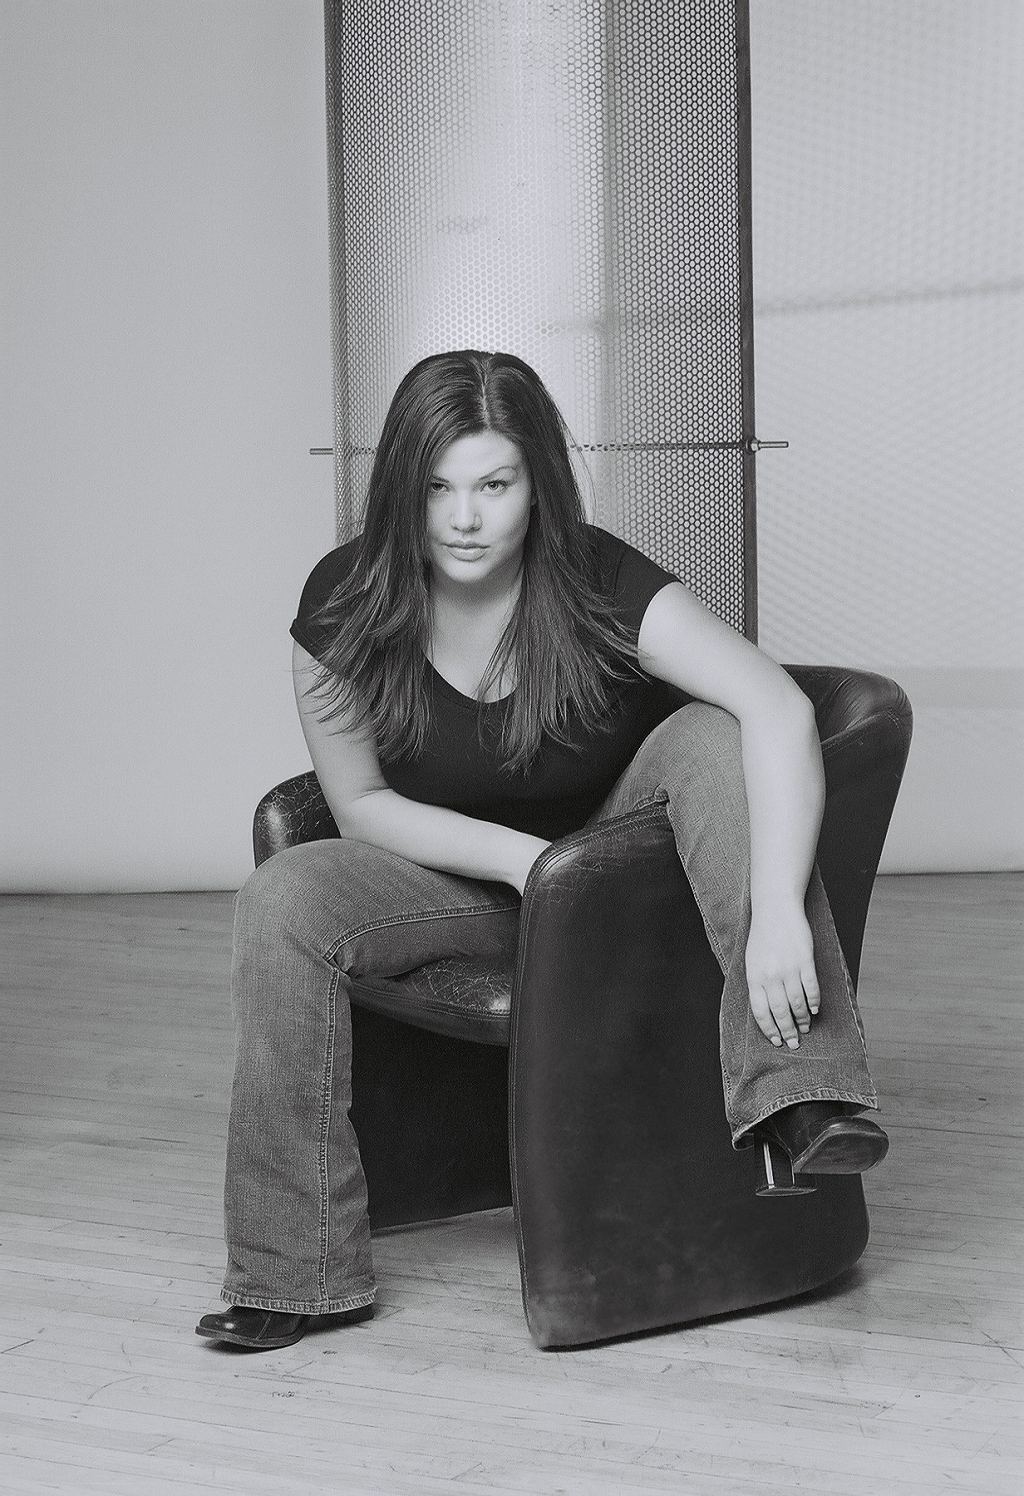 General photo of Christina Schmidt